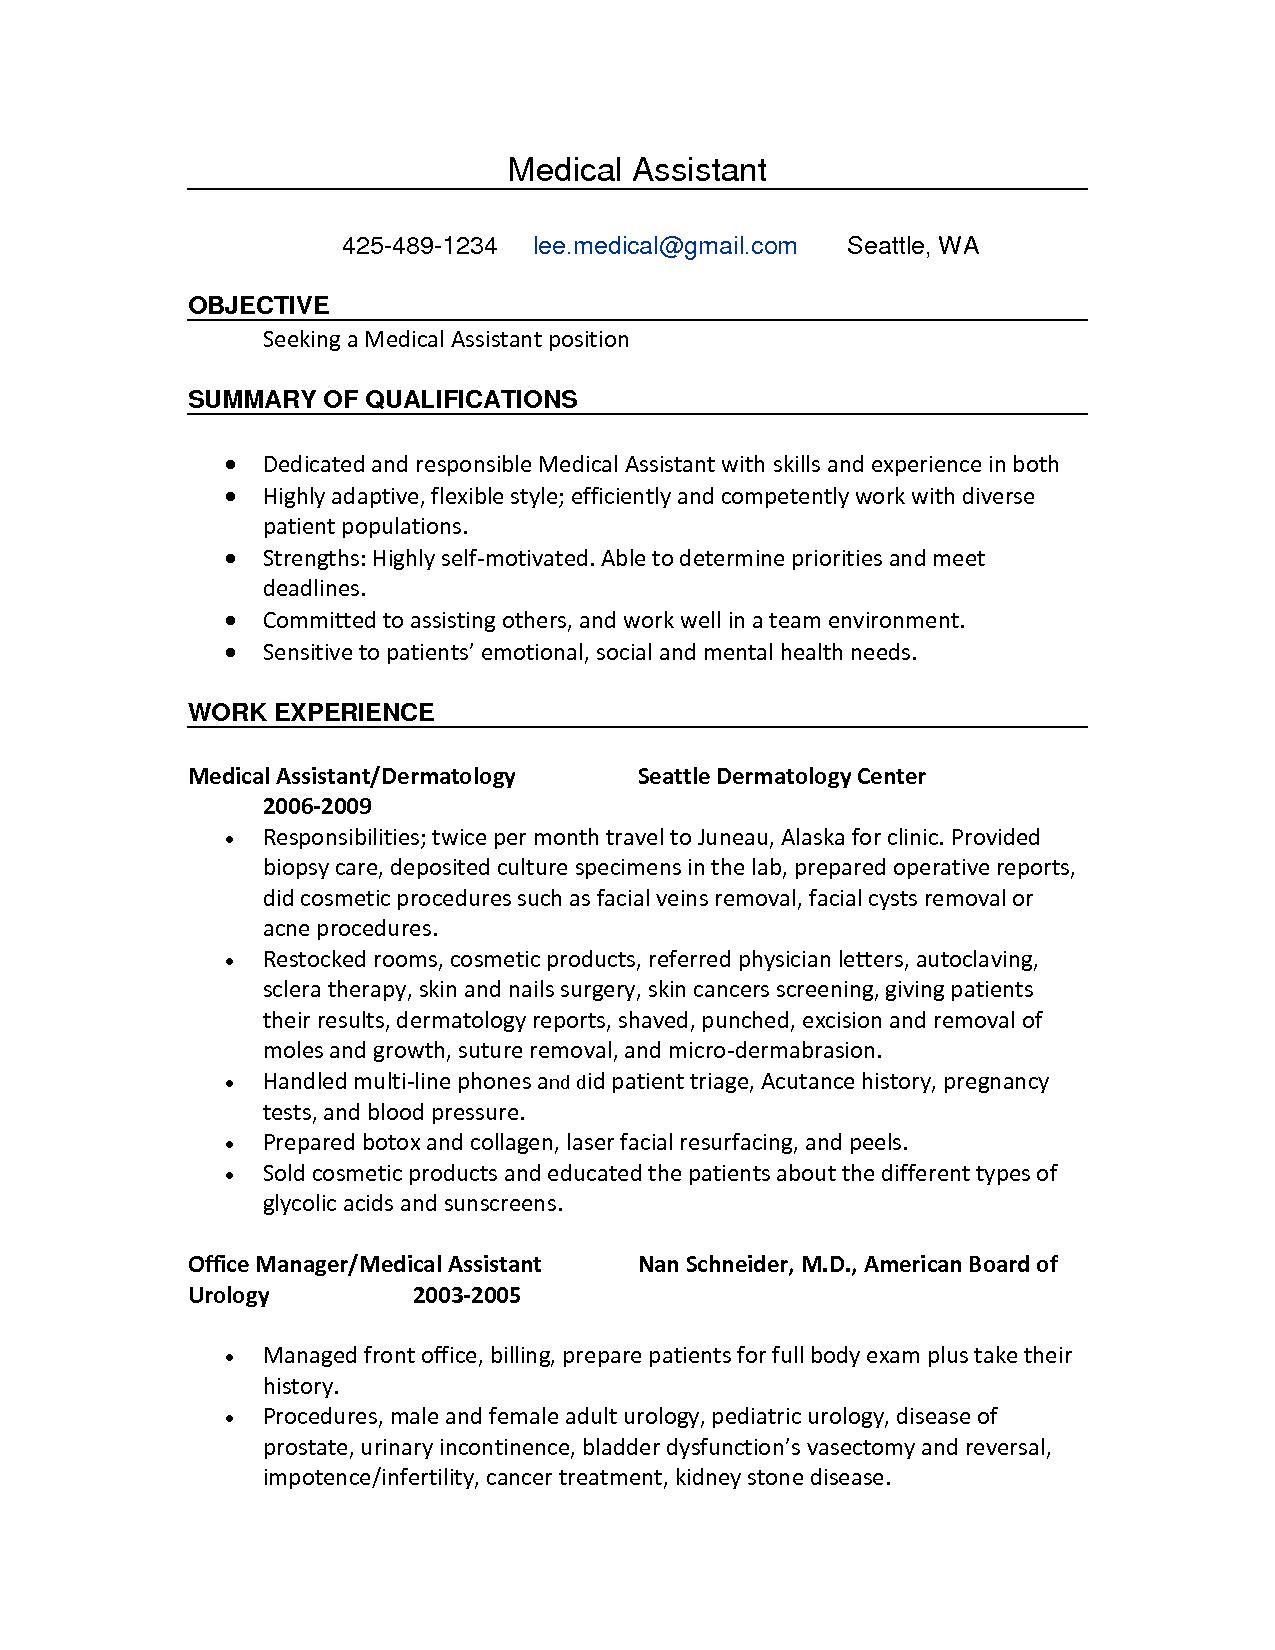 resume templates medical assistant resume samples medical